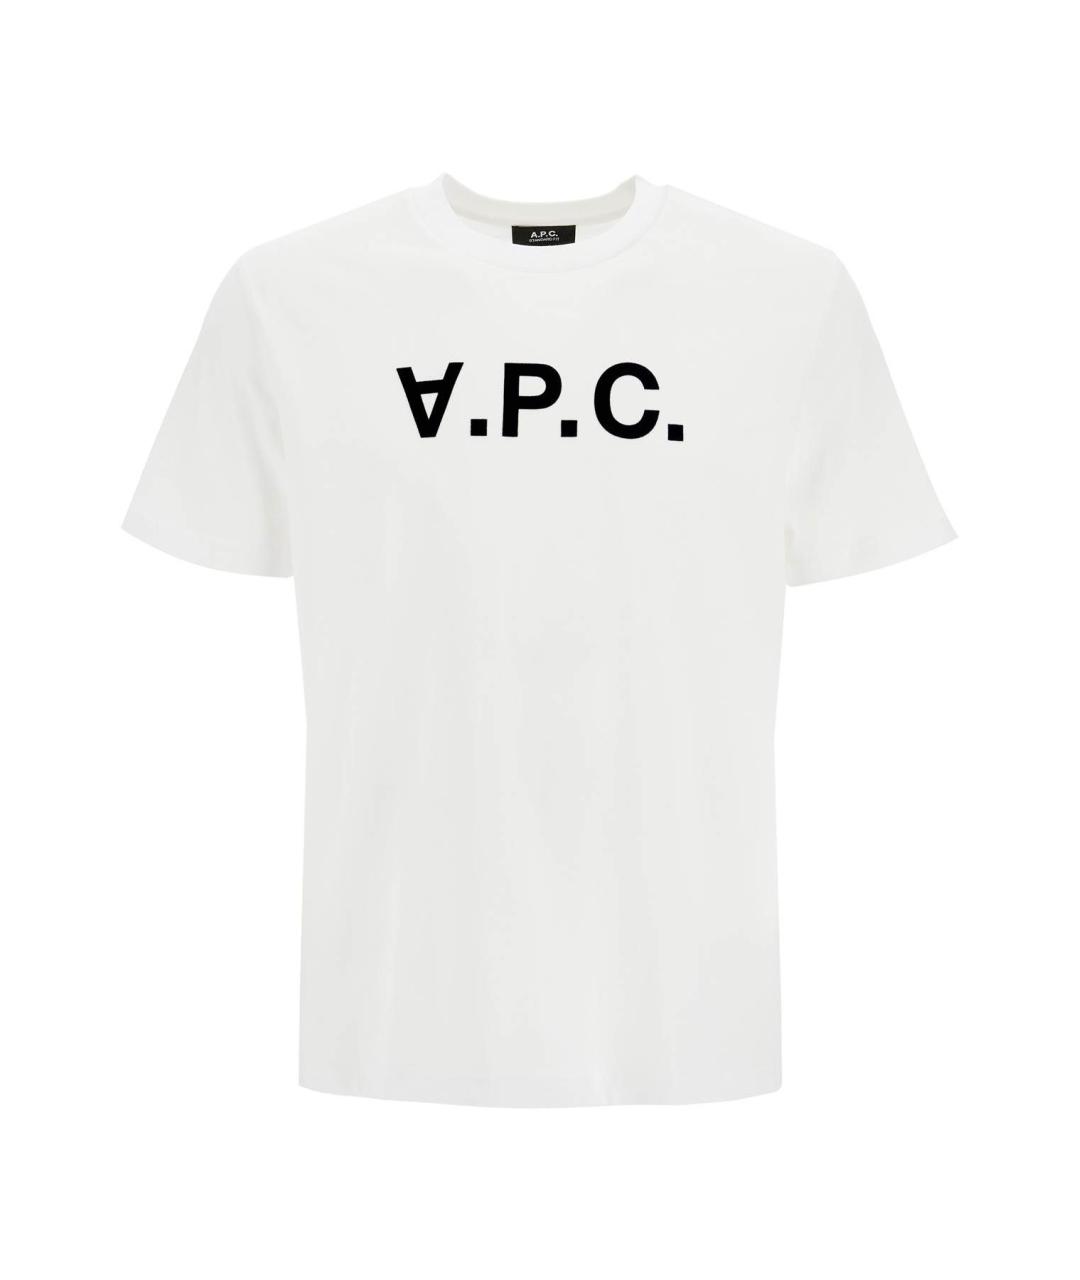 A.P.C. Белая хлопковая футболка, фото 1